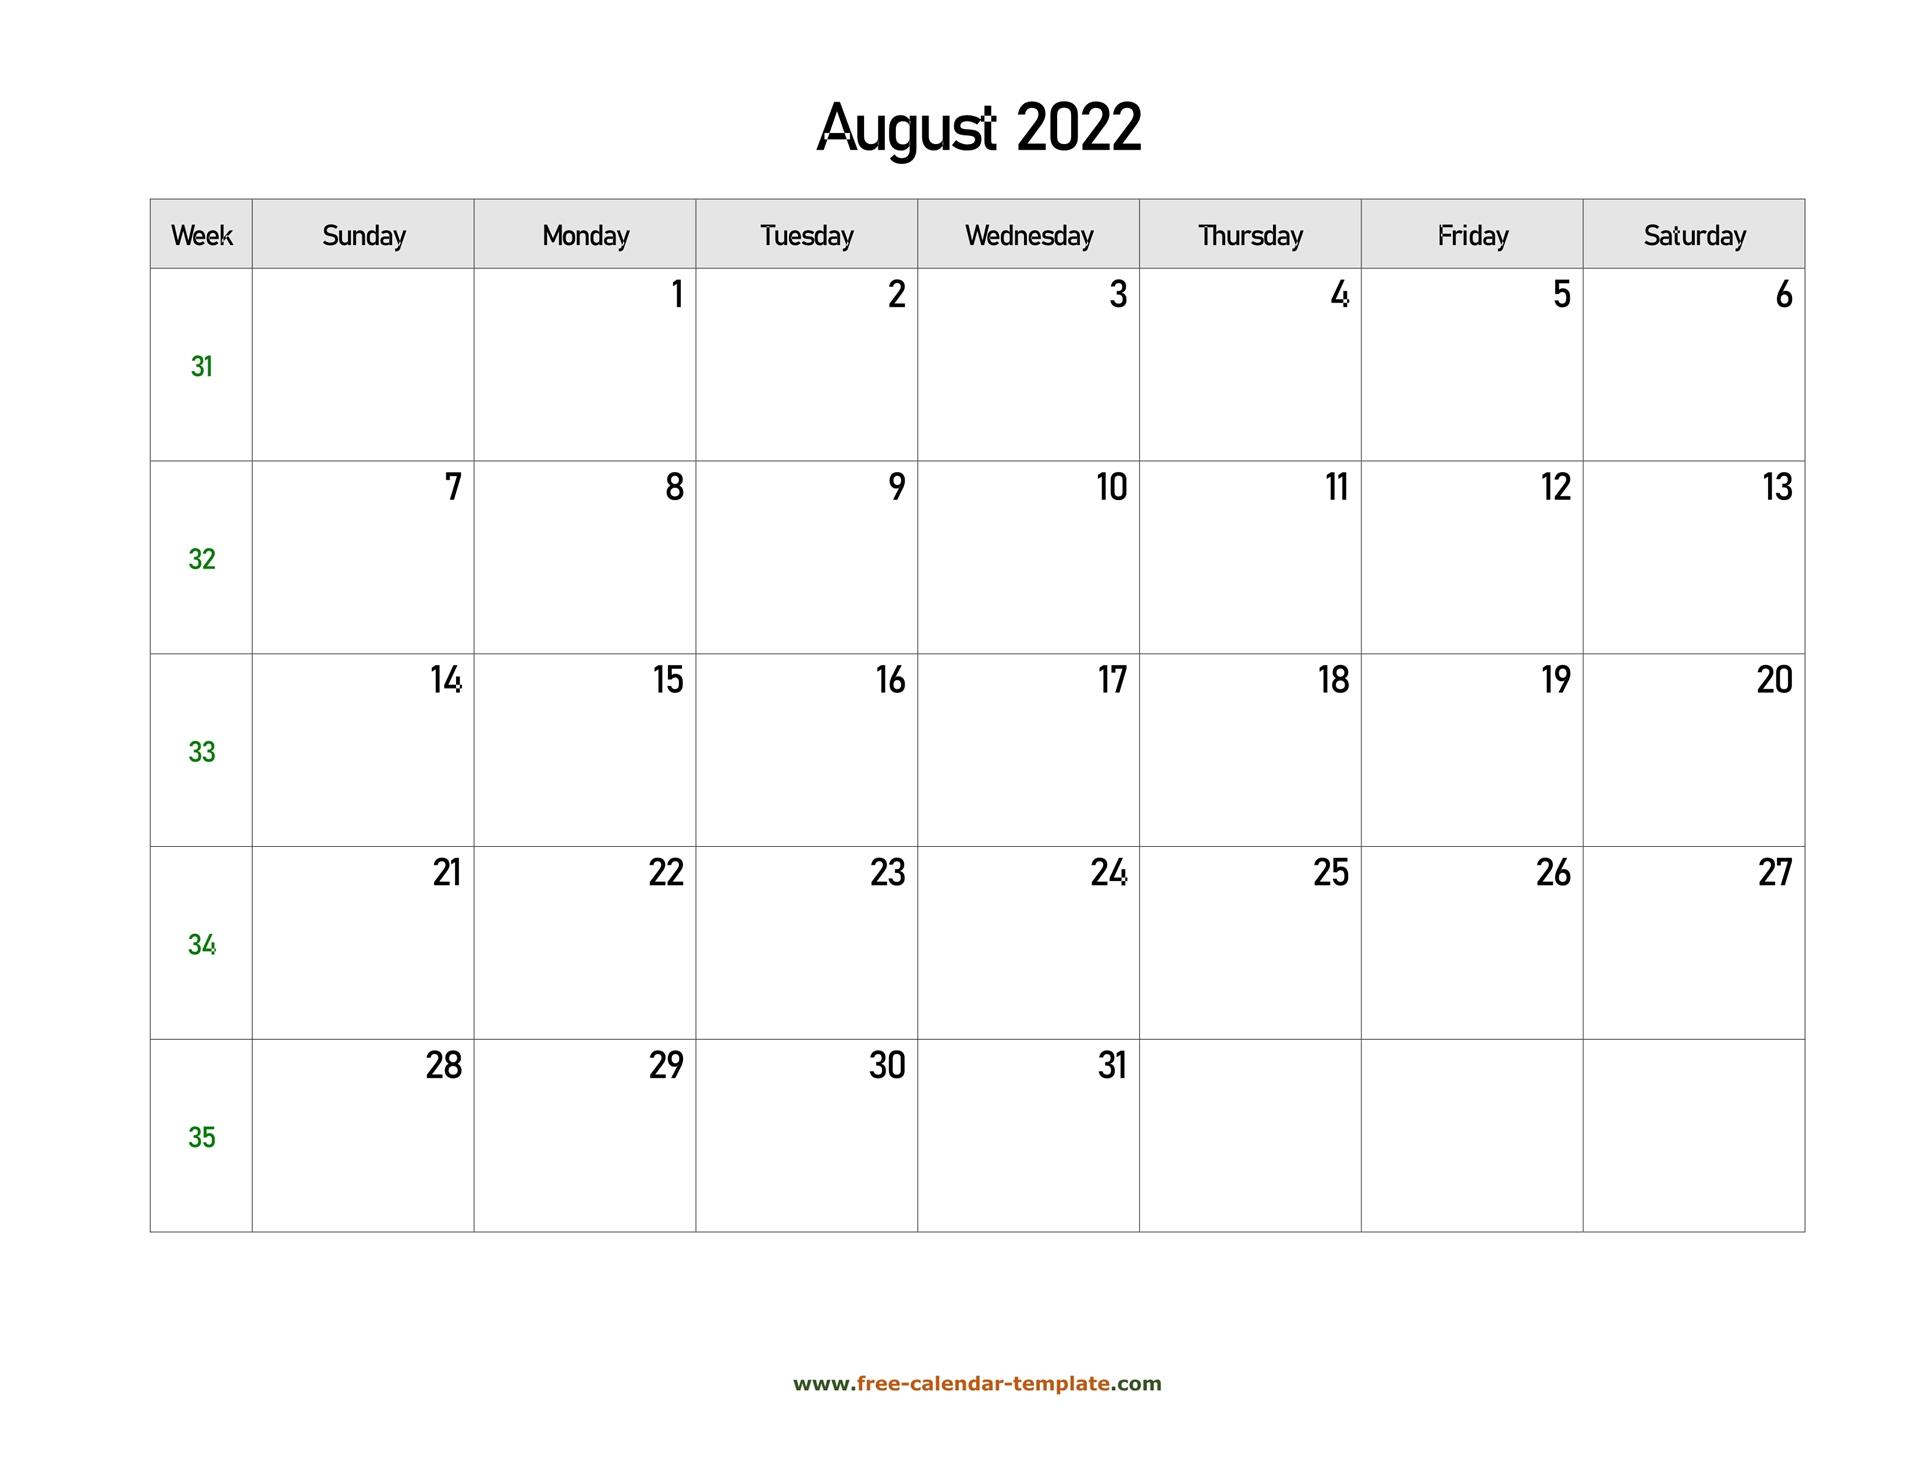 Take August 2022 Indian Calendar